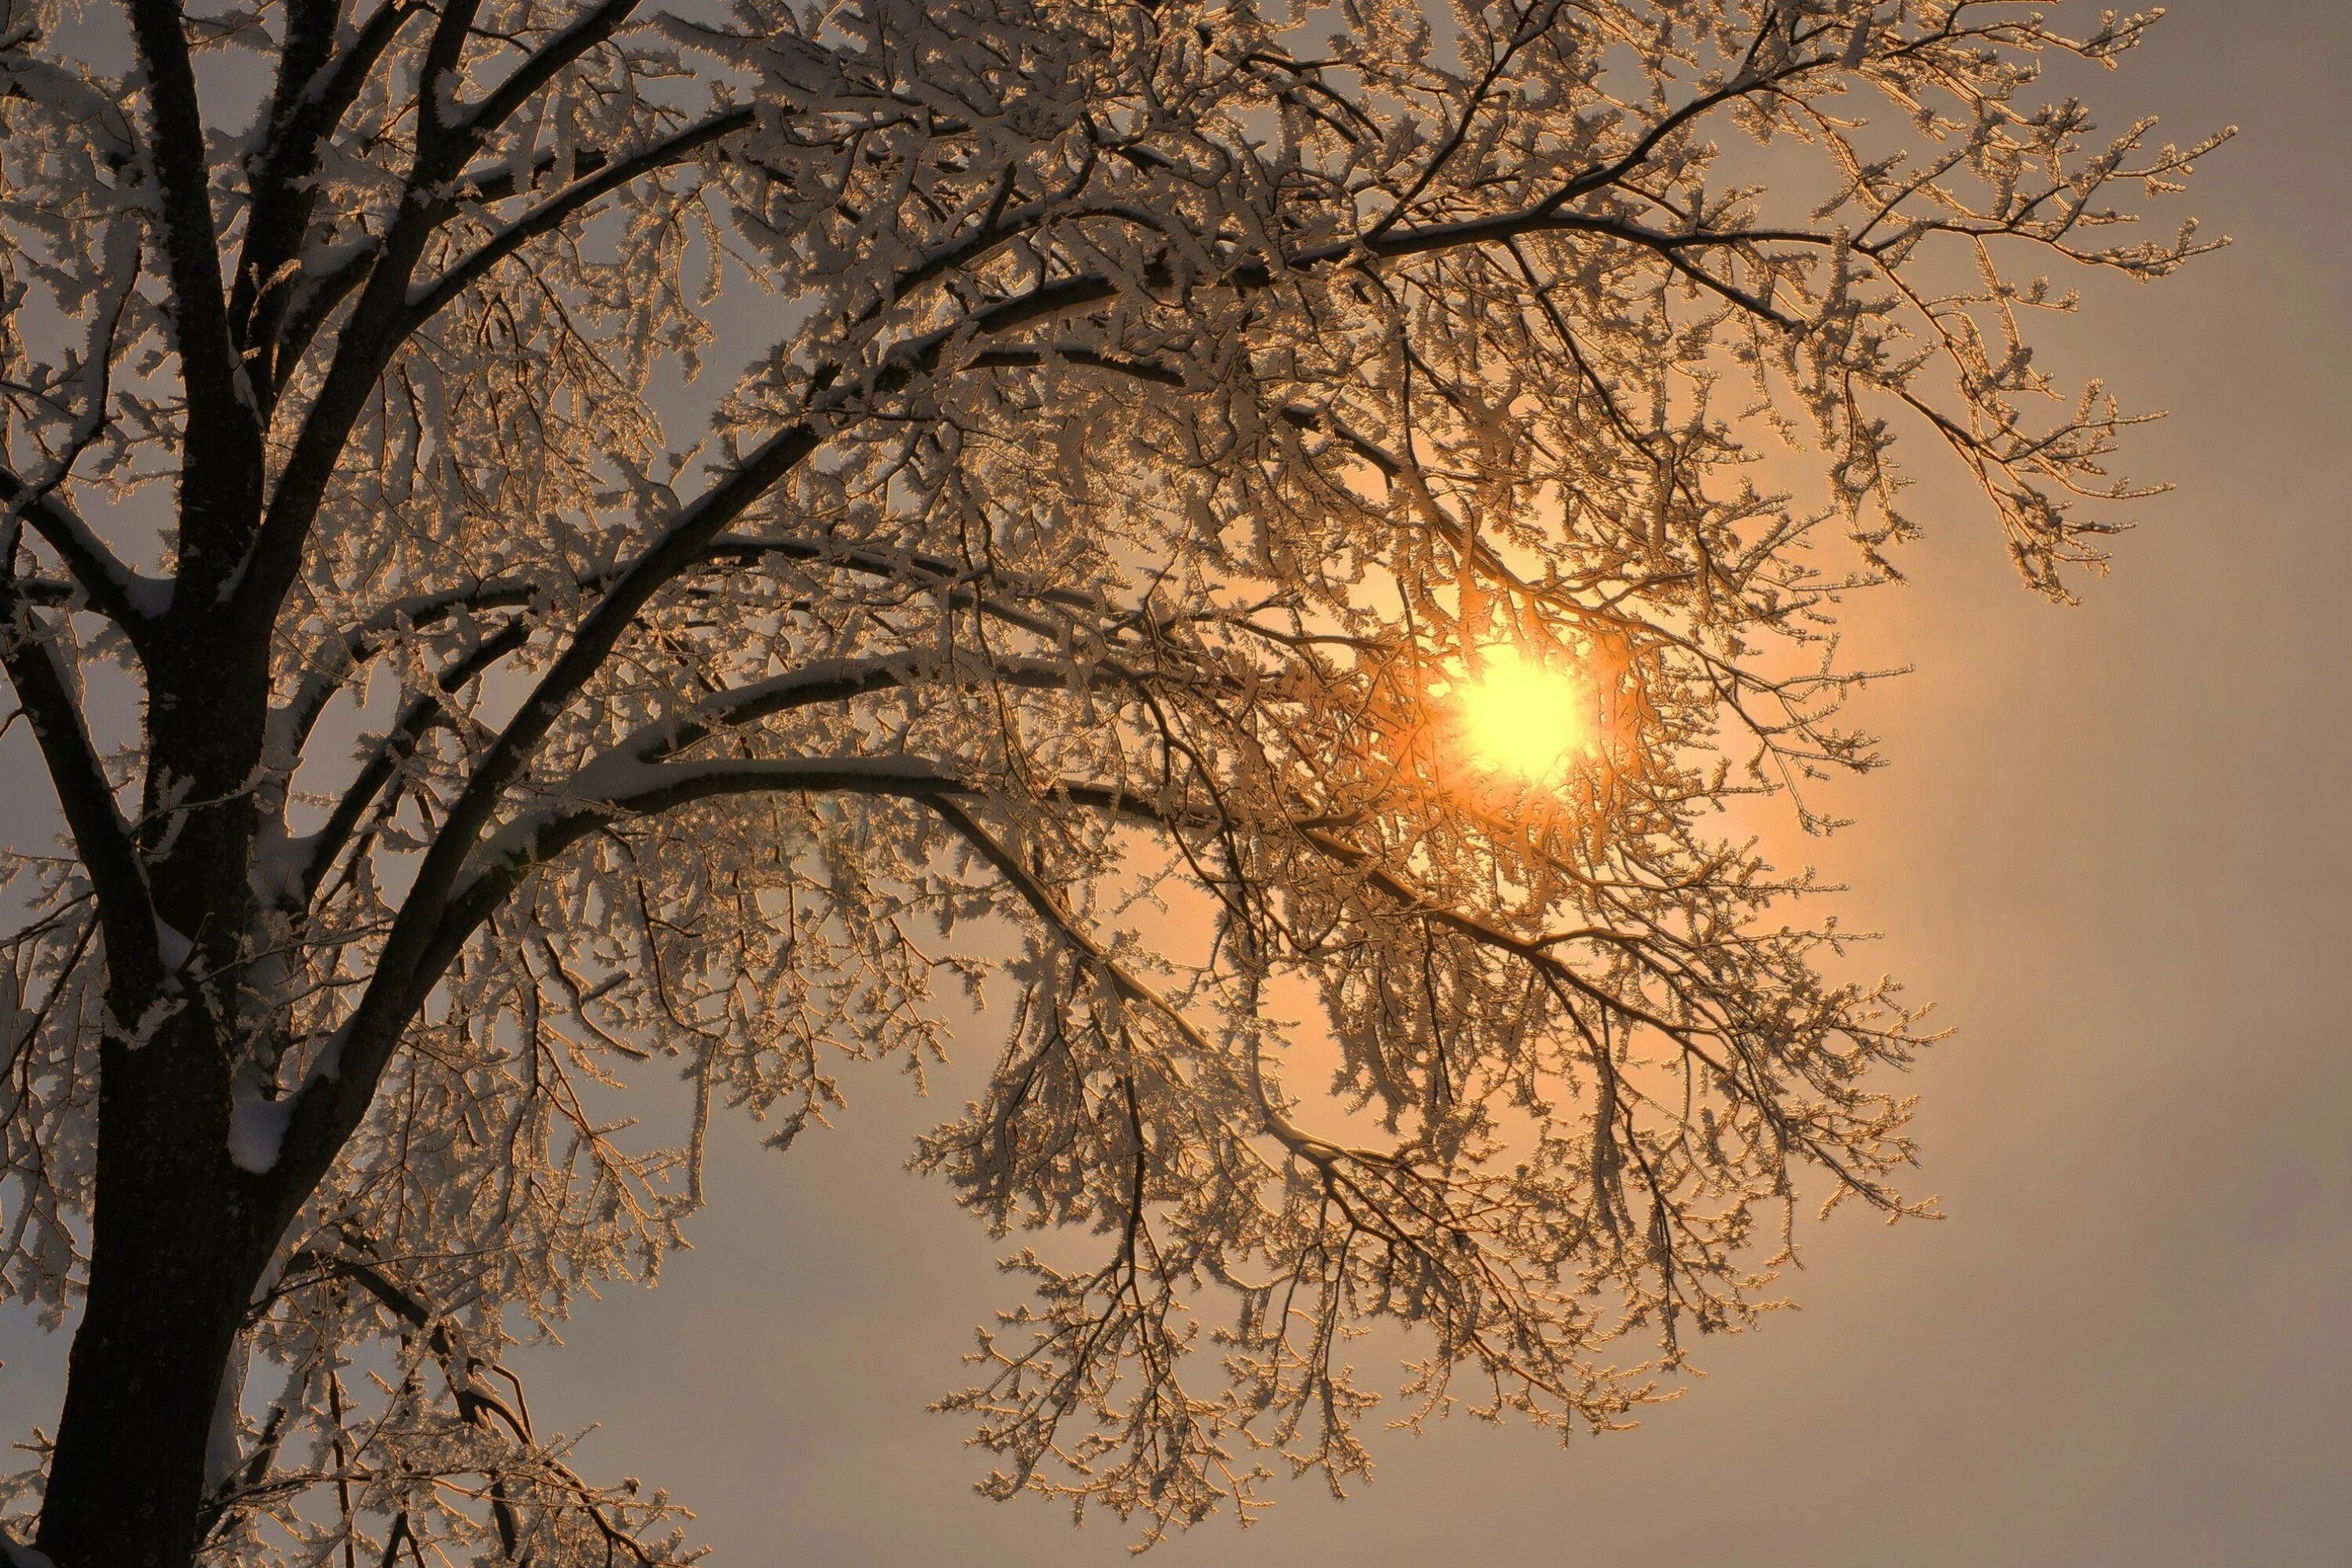 Снег и солнце. Зимний лес солнце. Зима солнце сквозь деревья. Солнце греет сильнее